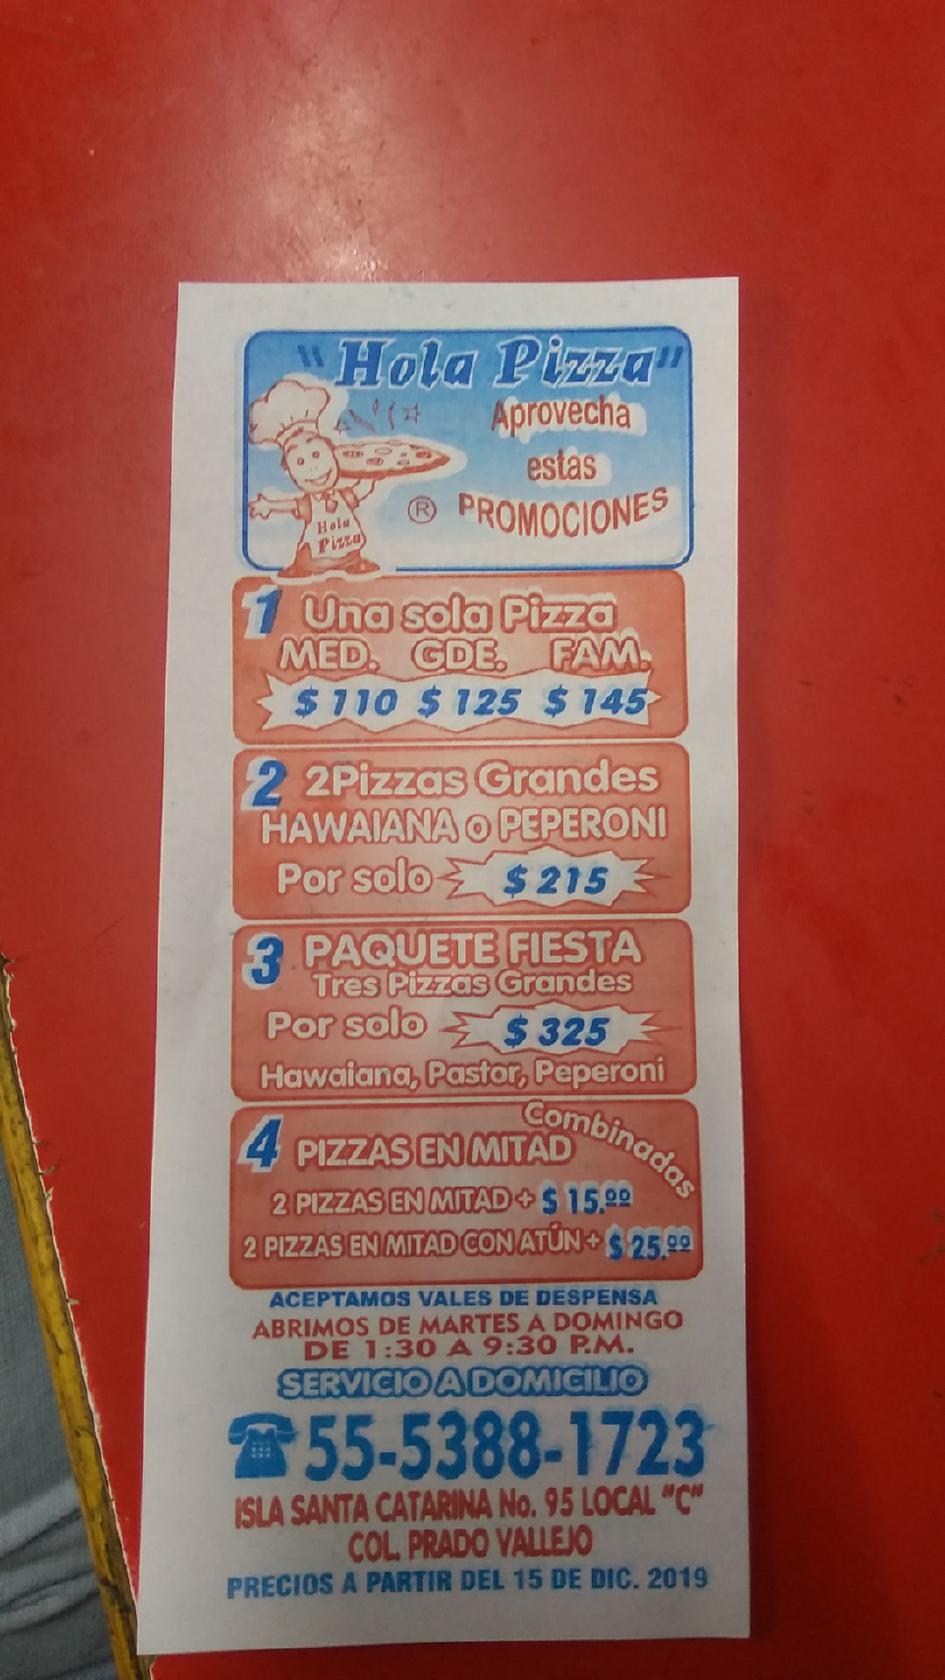 Hola Pizza restaurant, Tlalnepantla de Baz, Isla Sta. Catarina  C